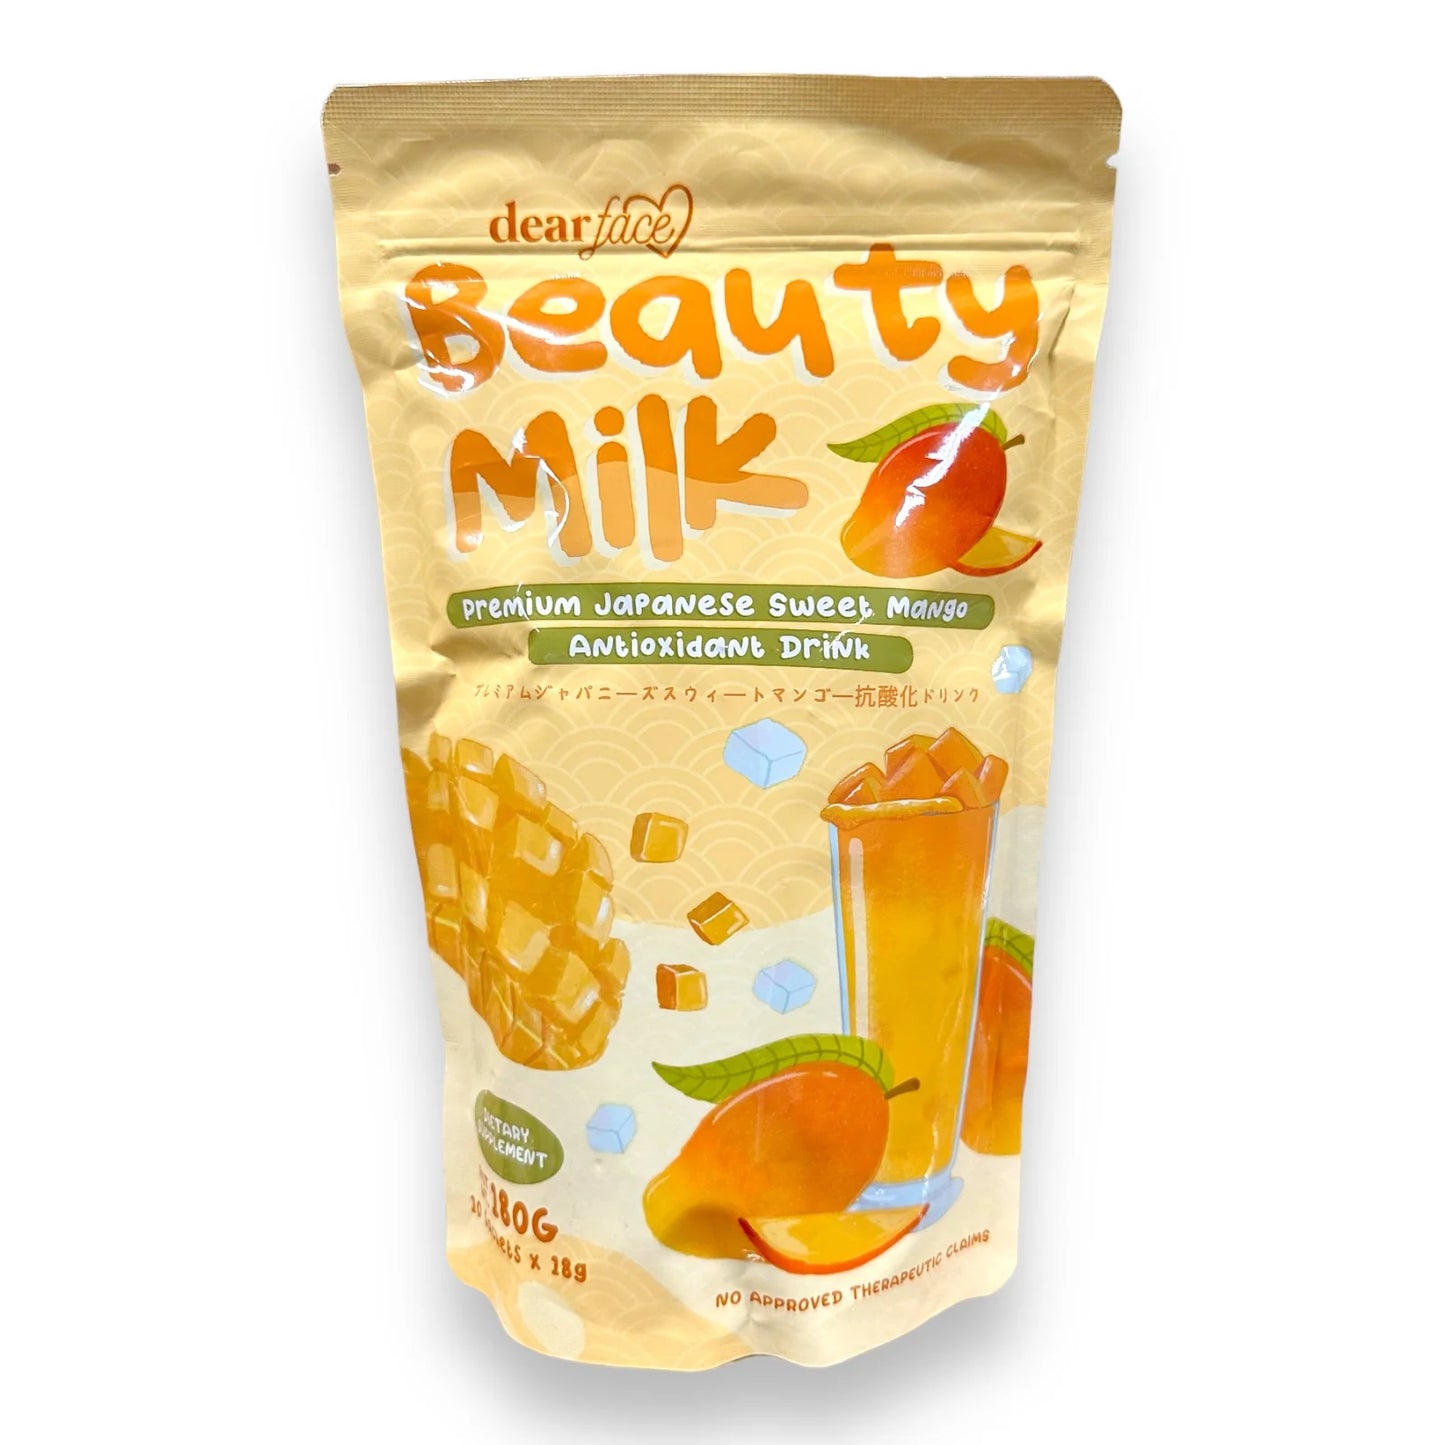 Dear Face Beauty Milk Premium Japanese Sweet Mango Drink